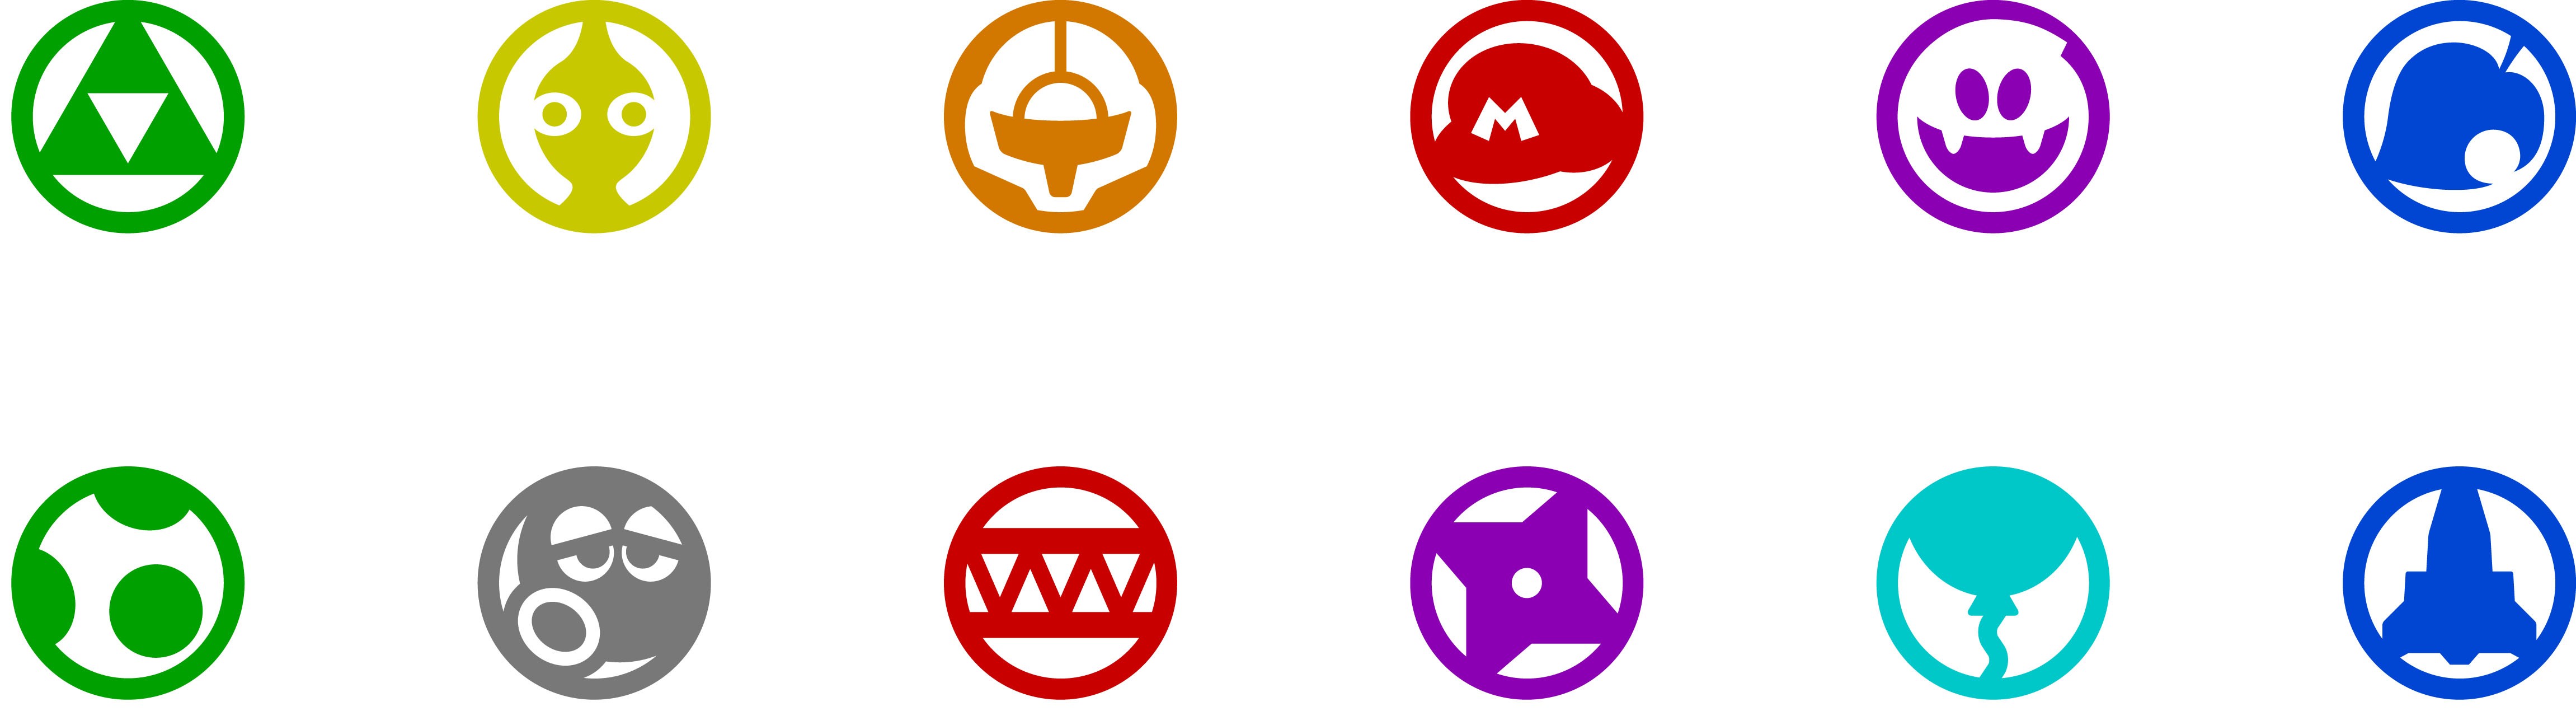 Nintendo Land icons.